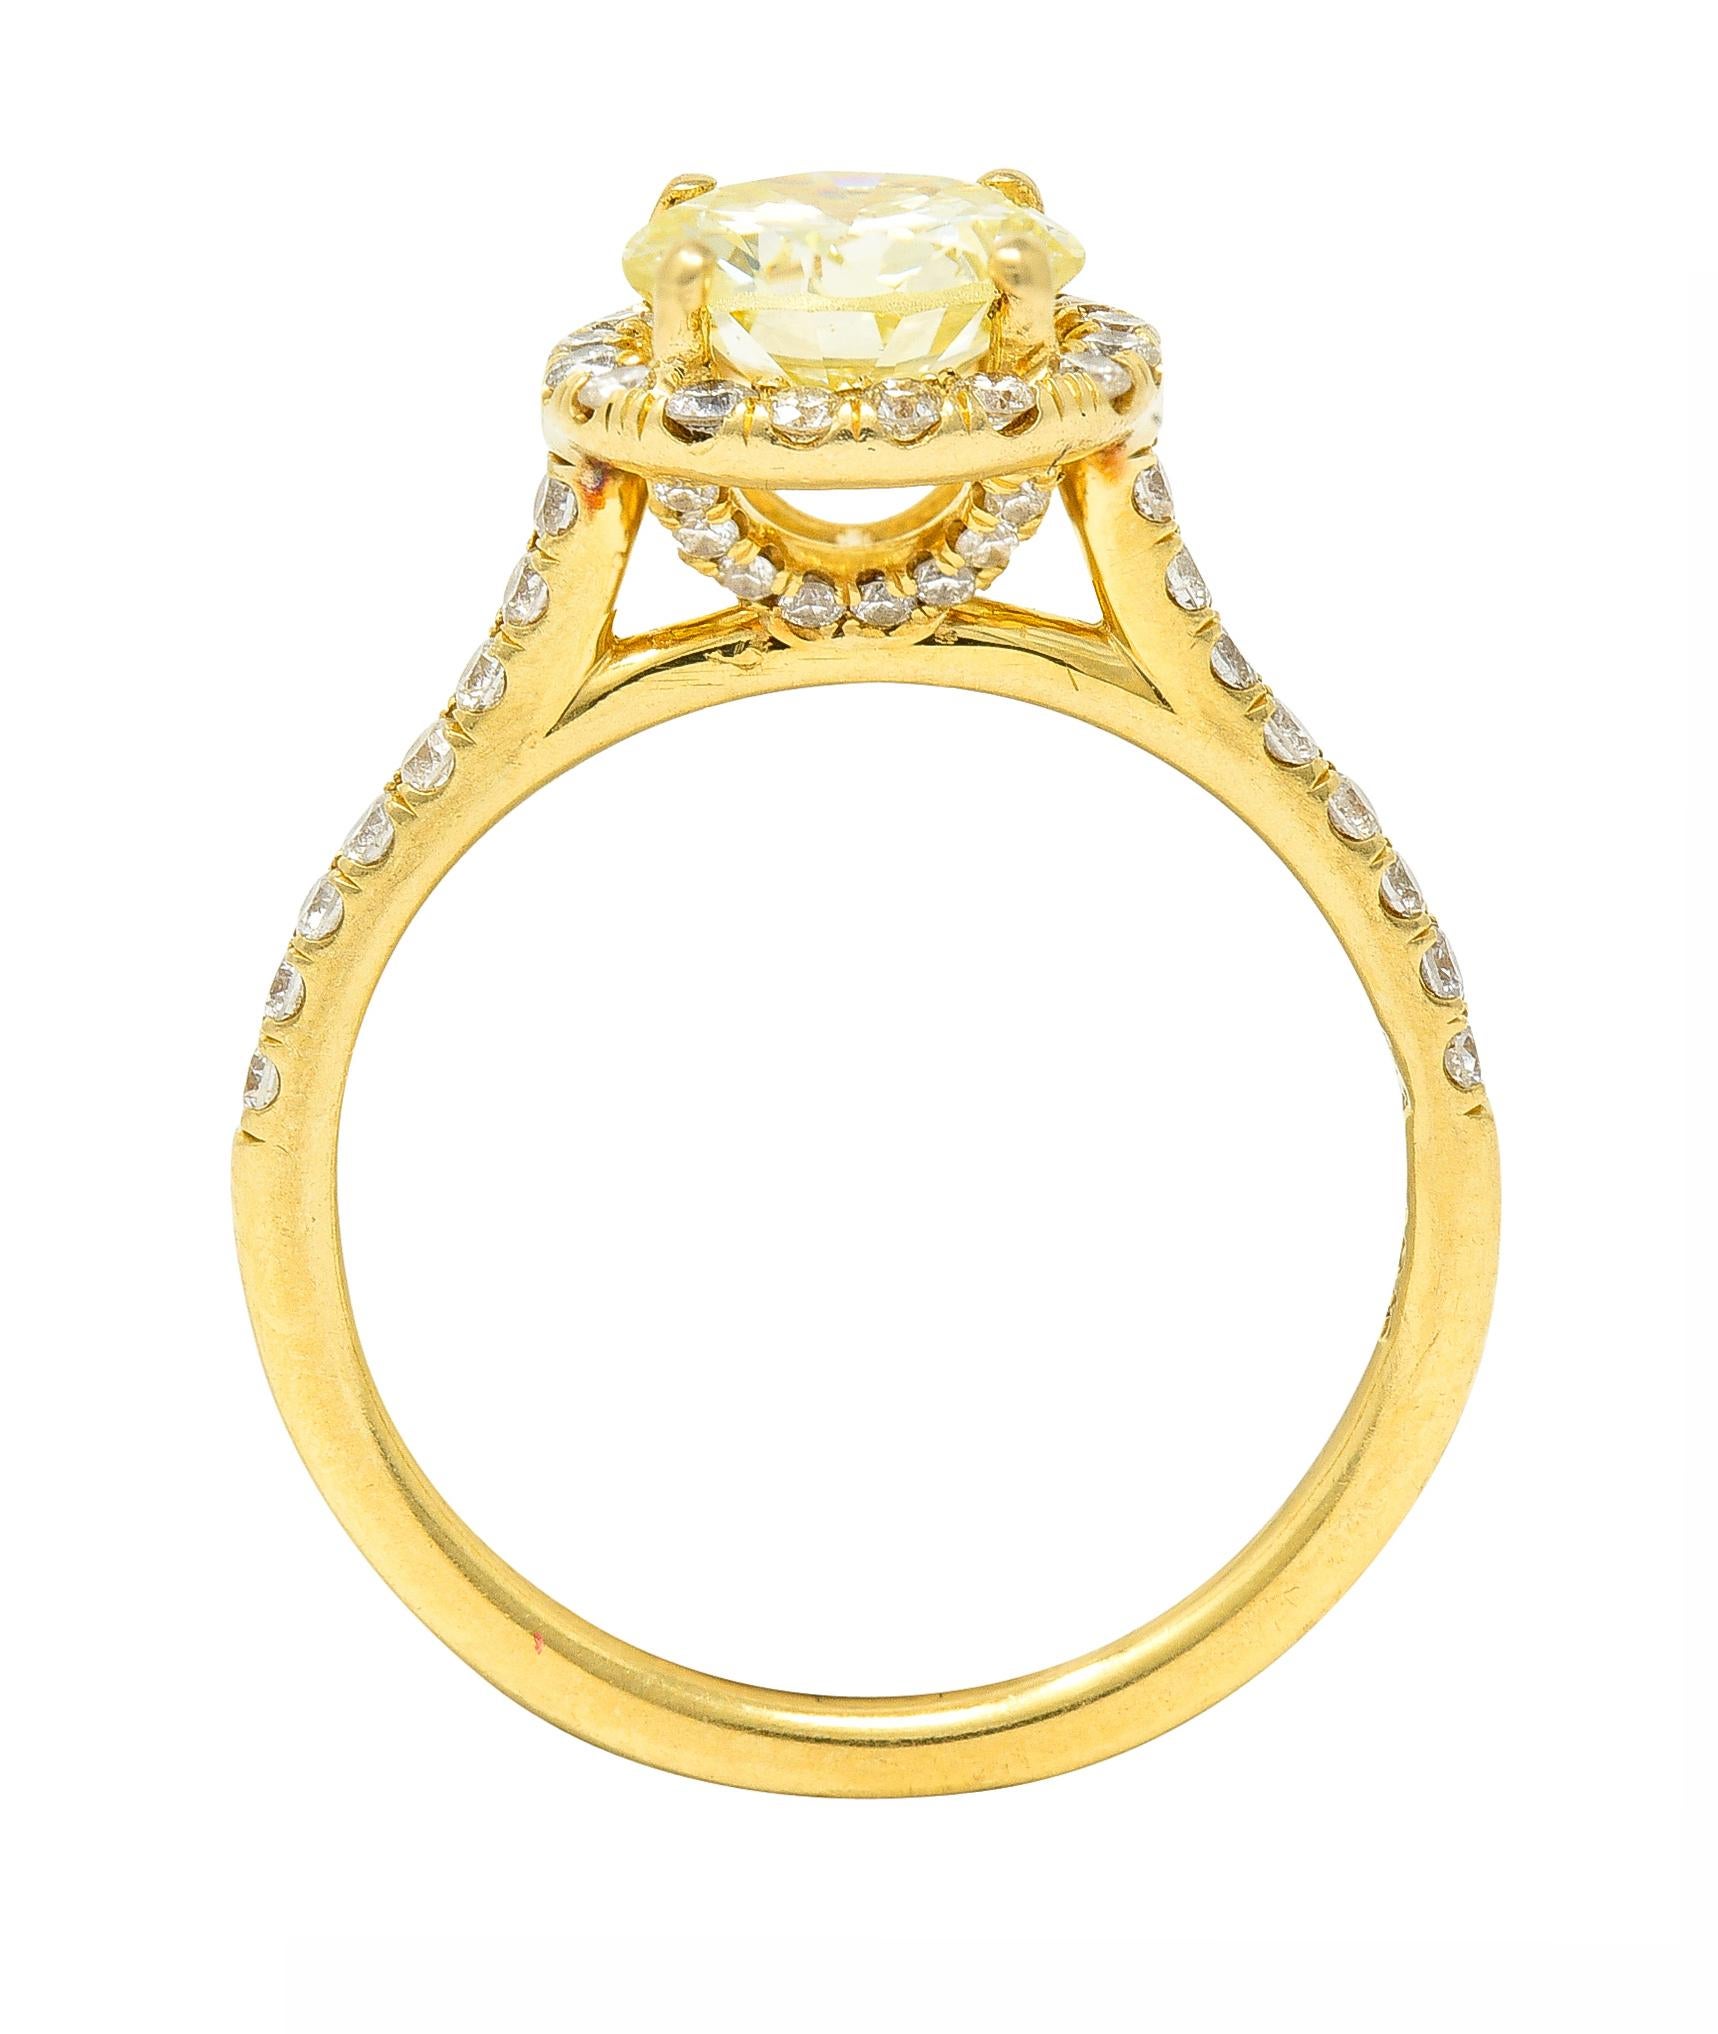 Contemporary 1.65 Carats Fancy Light Yellow Diamond 18 Karat Gold Halo Ring For Sale 5